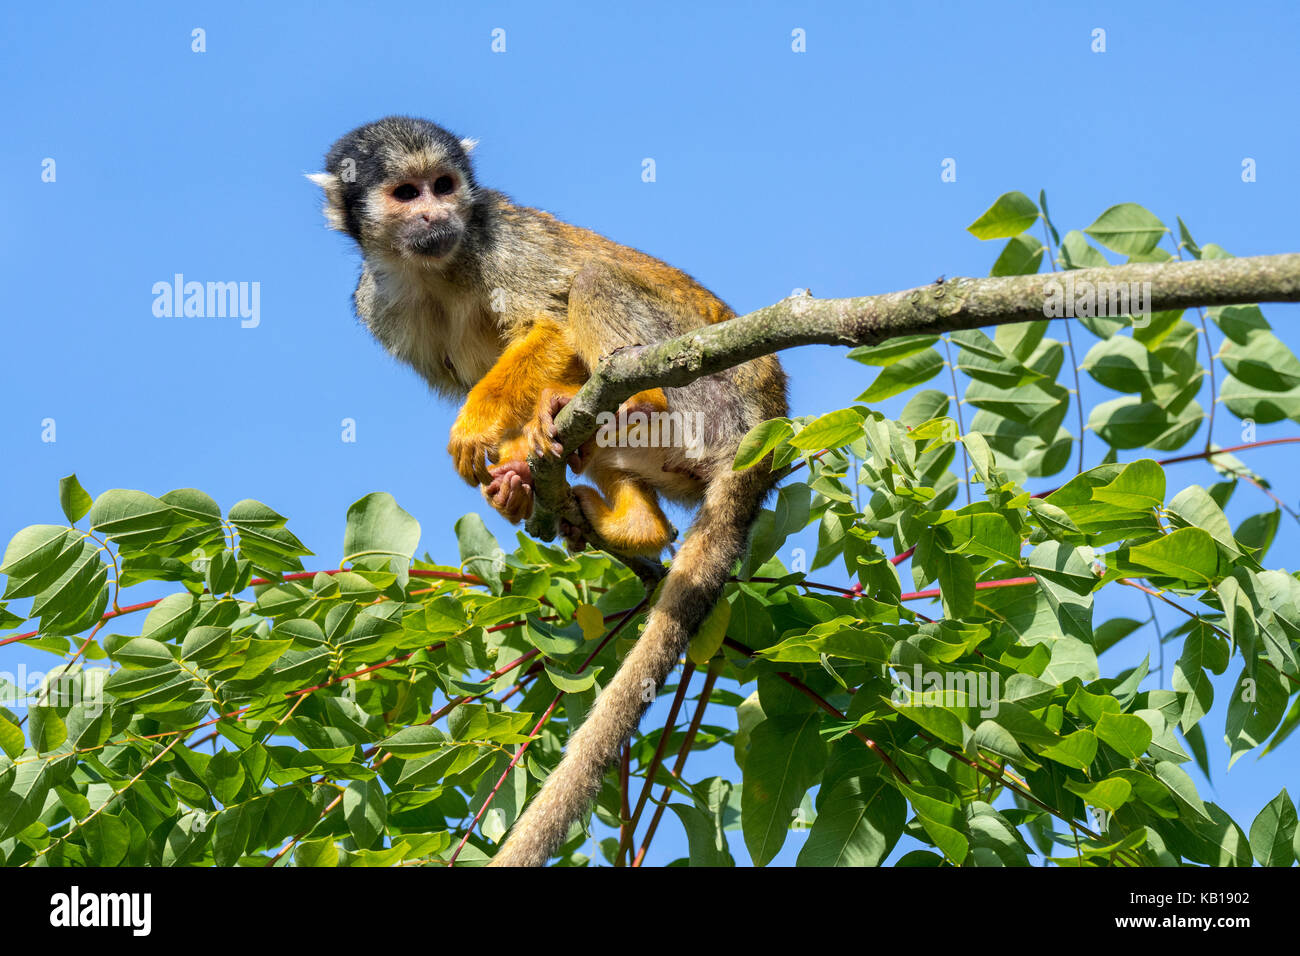 Black-capped squirrel monkey / Peruvian squirrel monkey (Saimiri boliviensis peruviensis) foraging in tree, native to South America Stock Photo